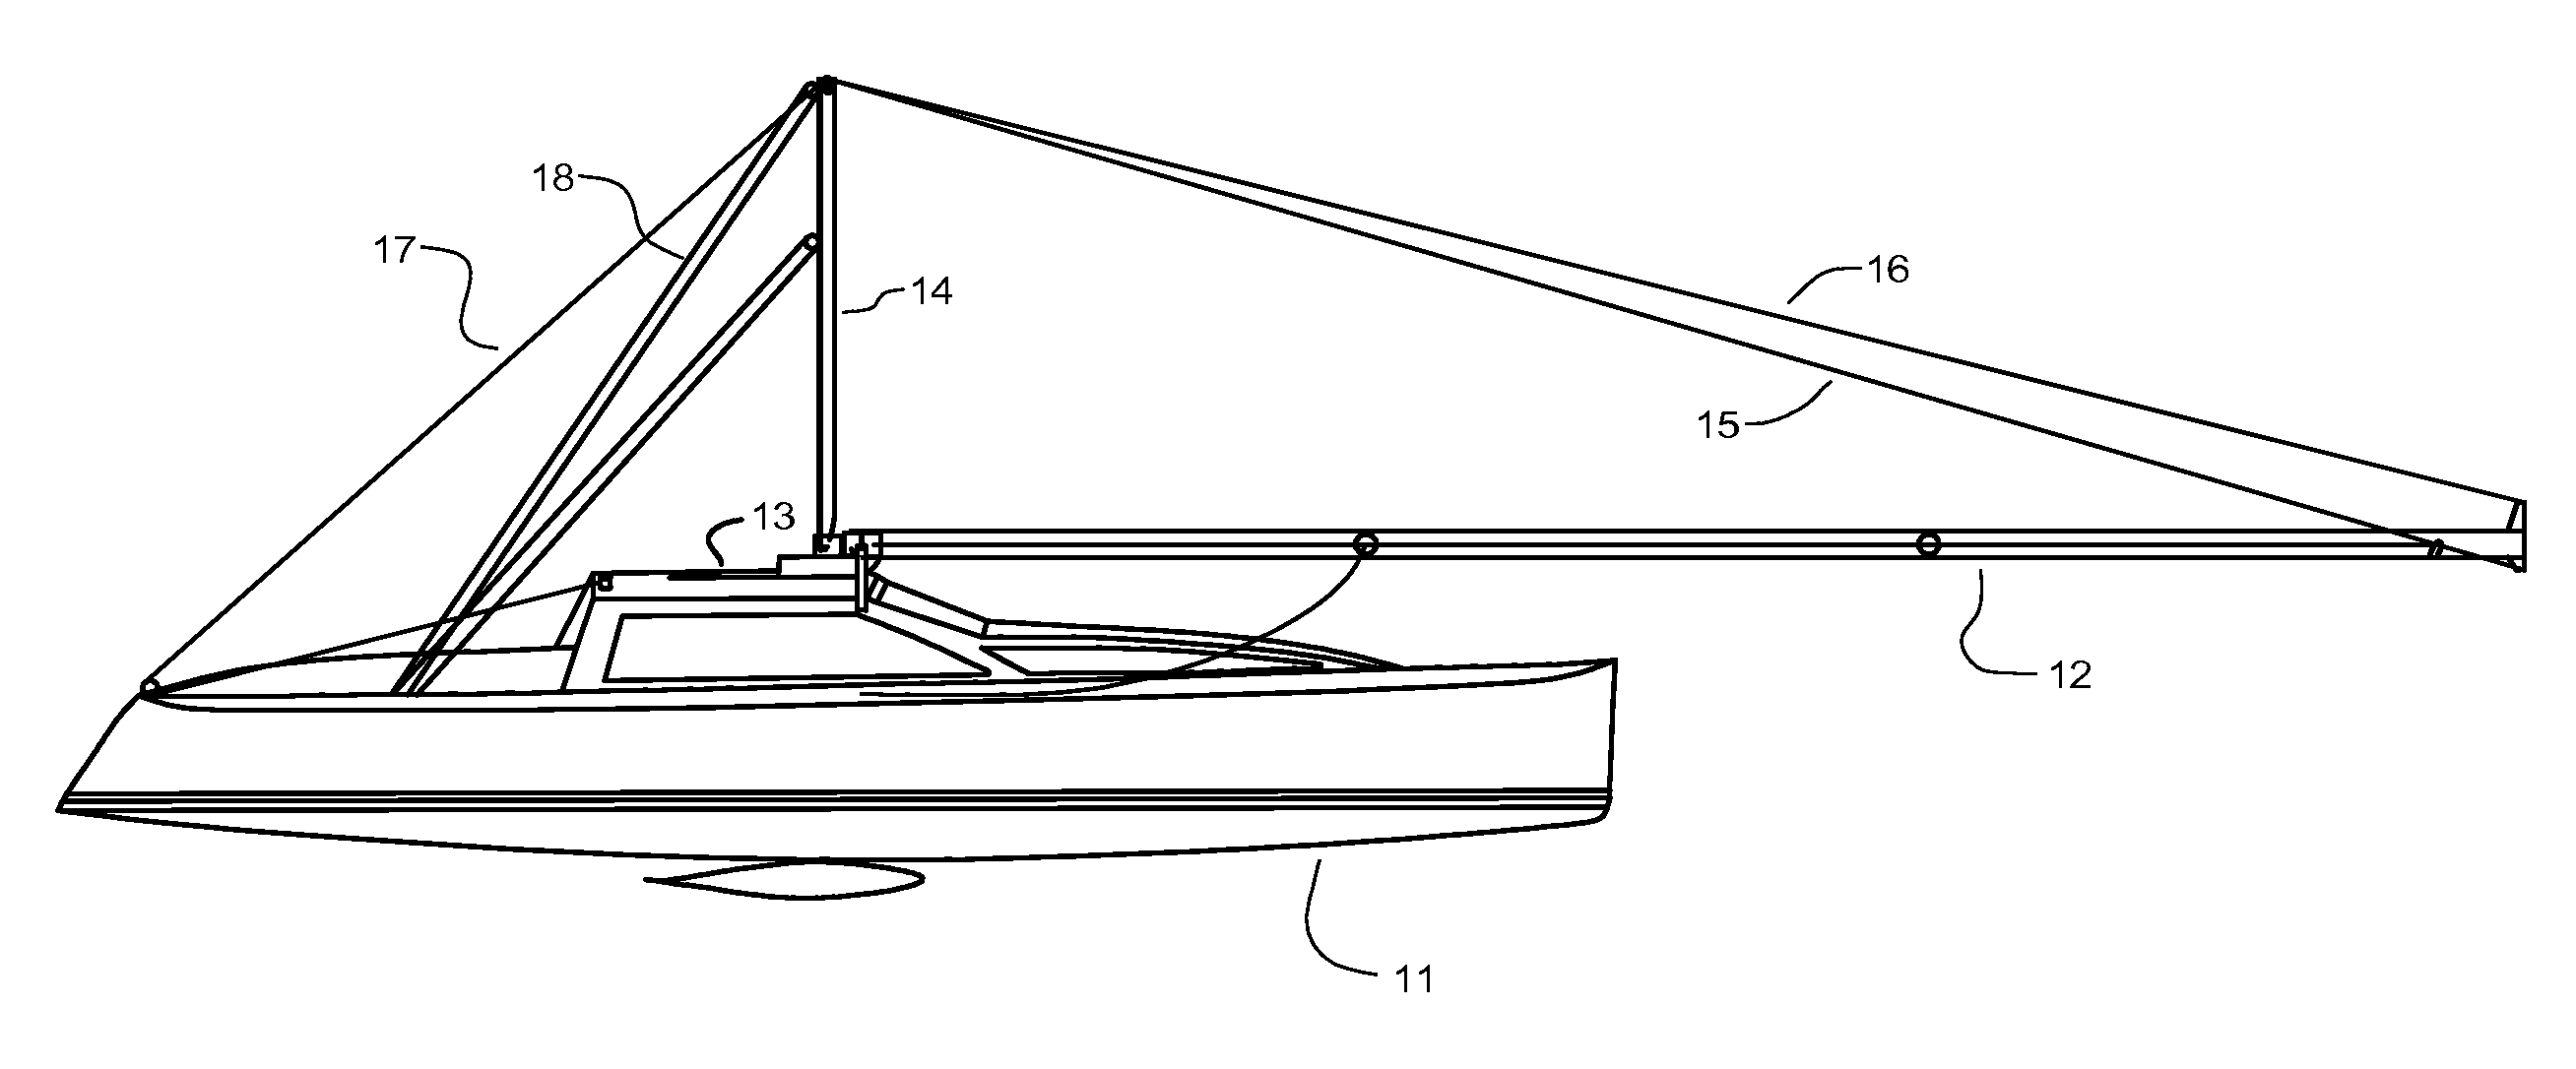 Trailerable sailboat with mast raising method